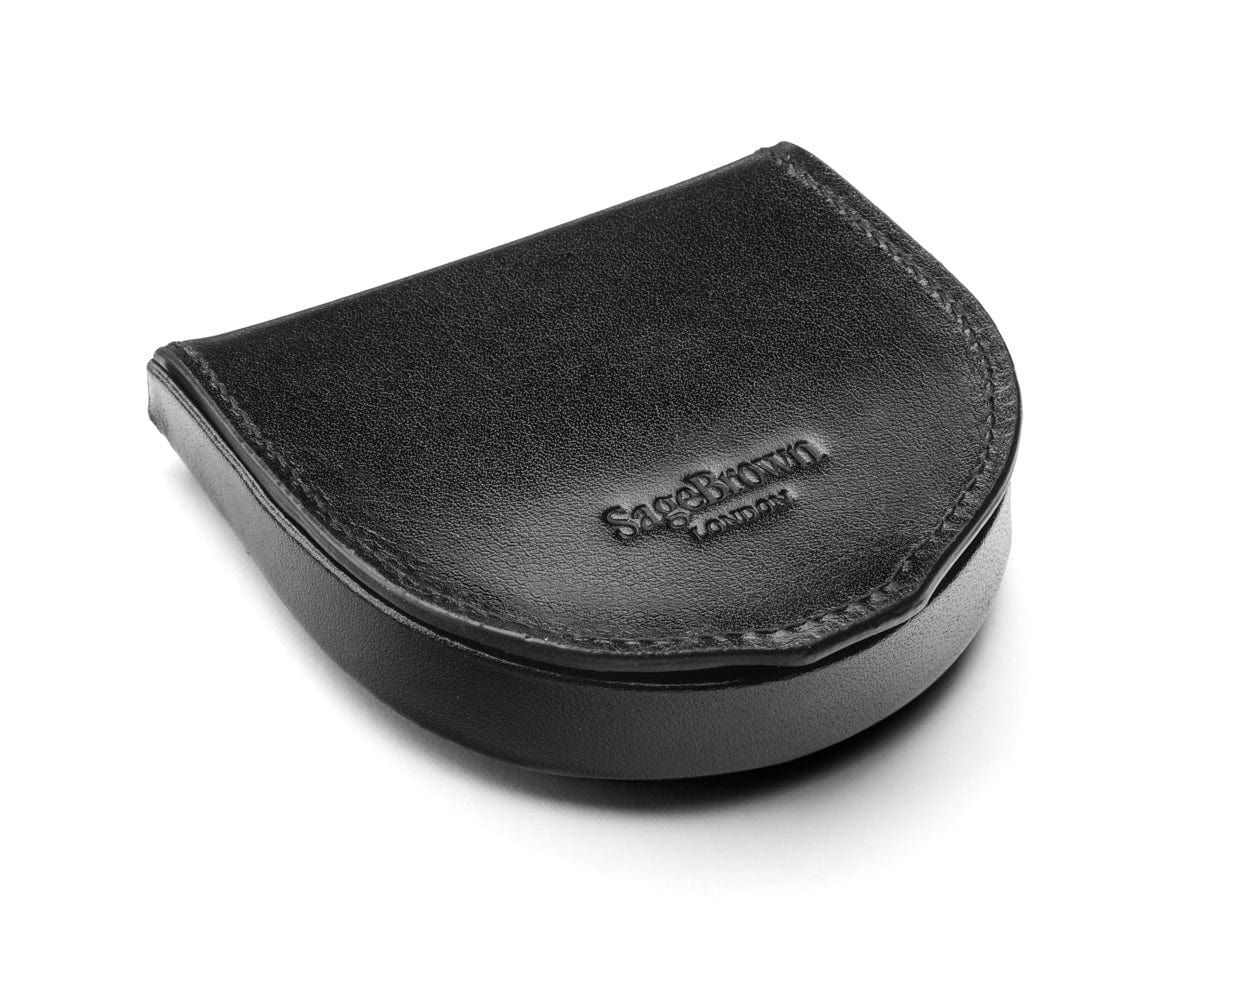 Leather horseshoe coin purse, black with cream, base